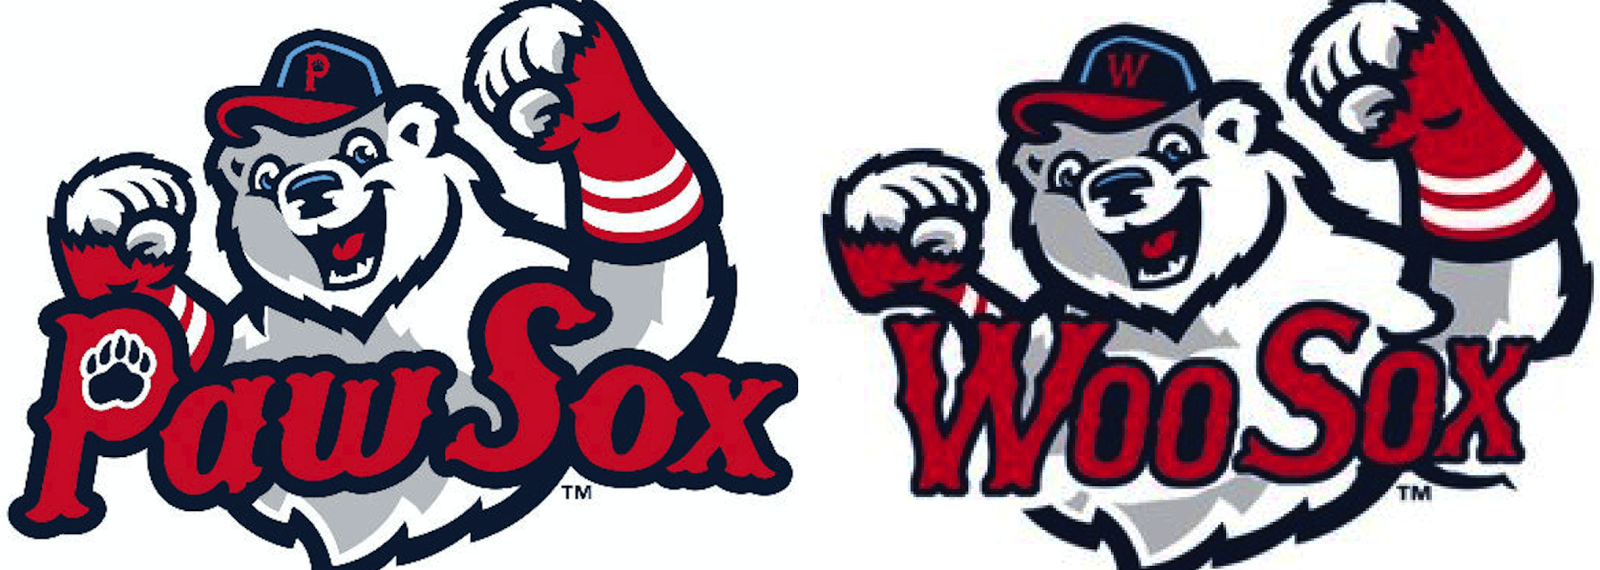 PawSox Logo - FenwayNation—Red Sox, Mookie, J.D., Bogaerts, Sale, JBJ—Founded 1 27